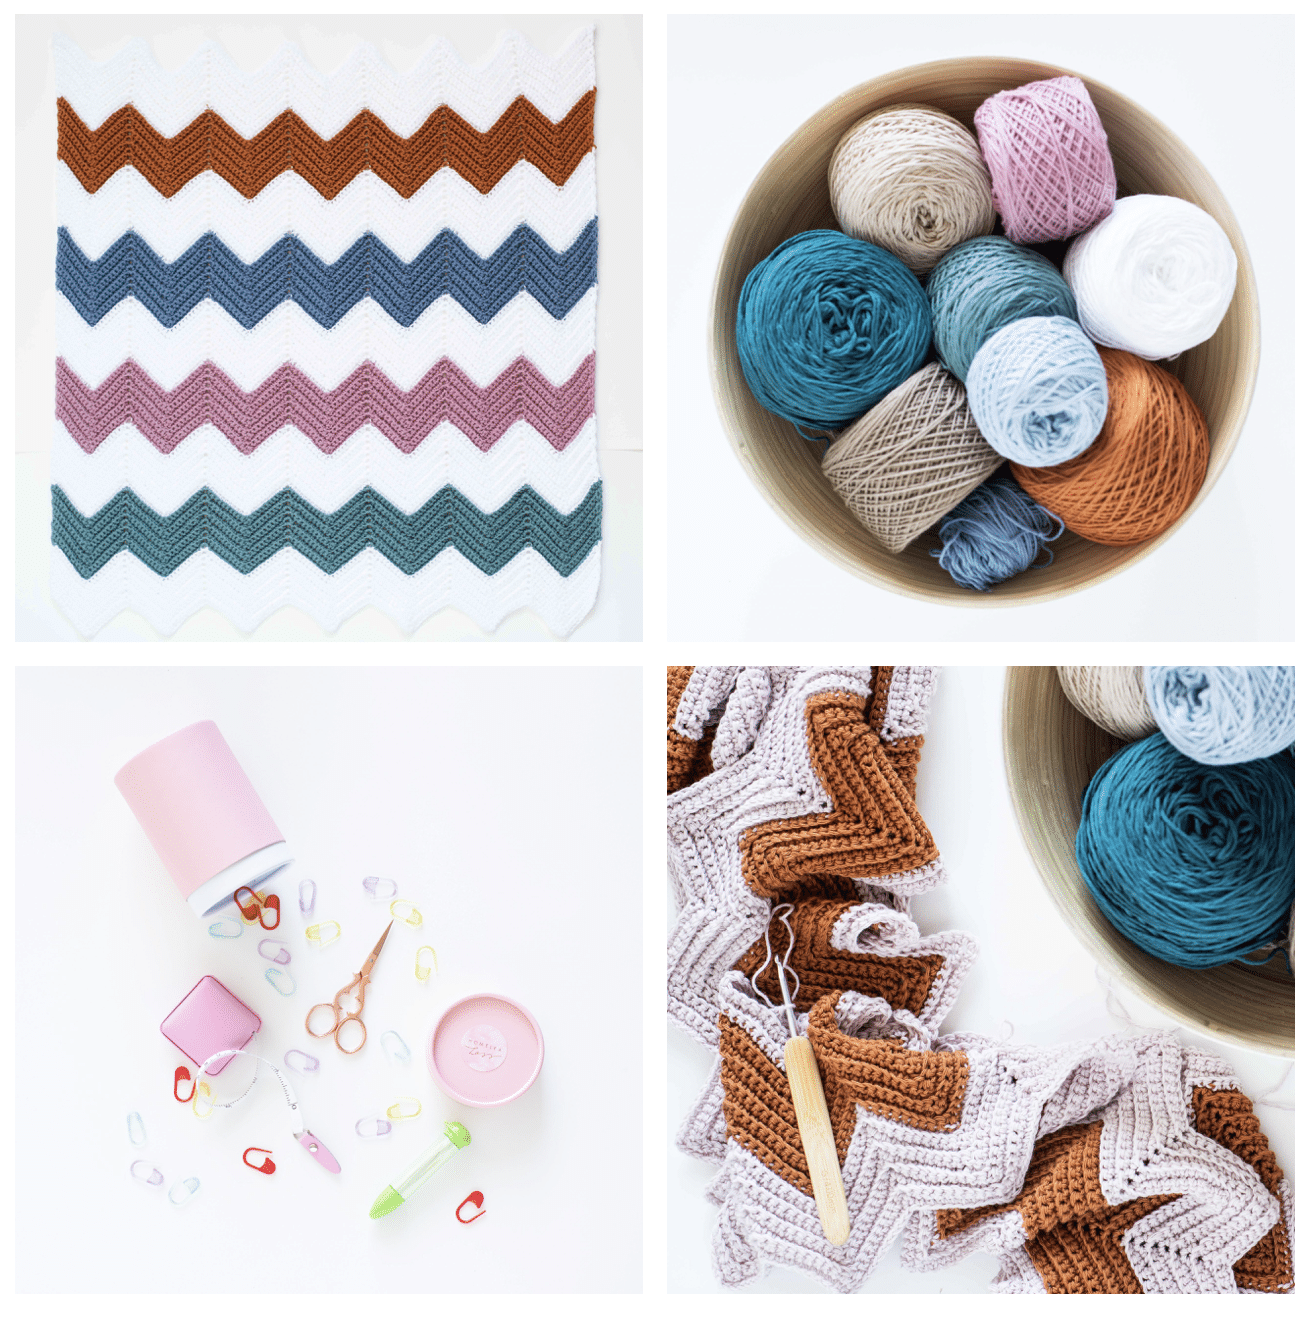 Calm Chevron Blanket crochet pattern and online course | Homelea Lass contemporary crochet